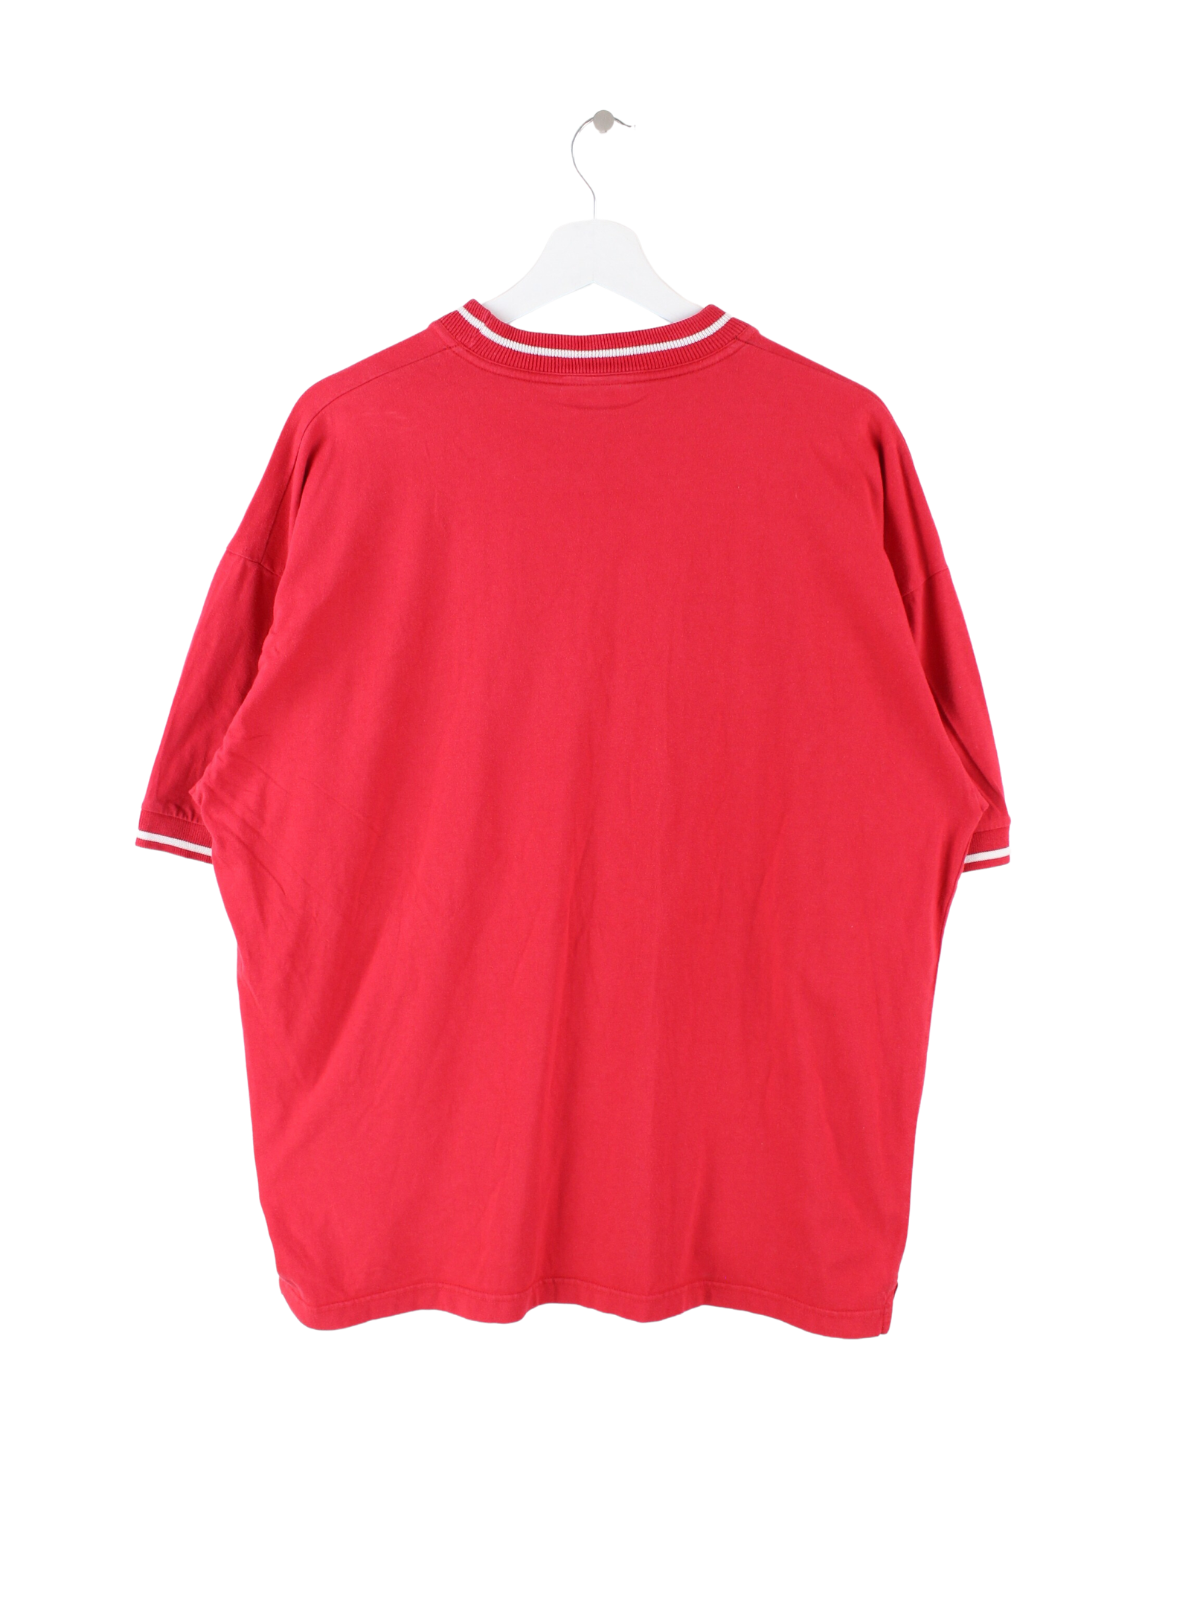 Vintage T-Shirt Rot XL